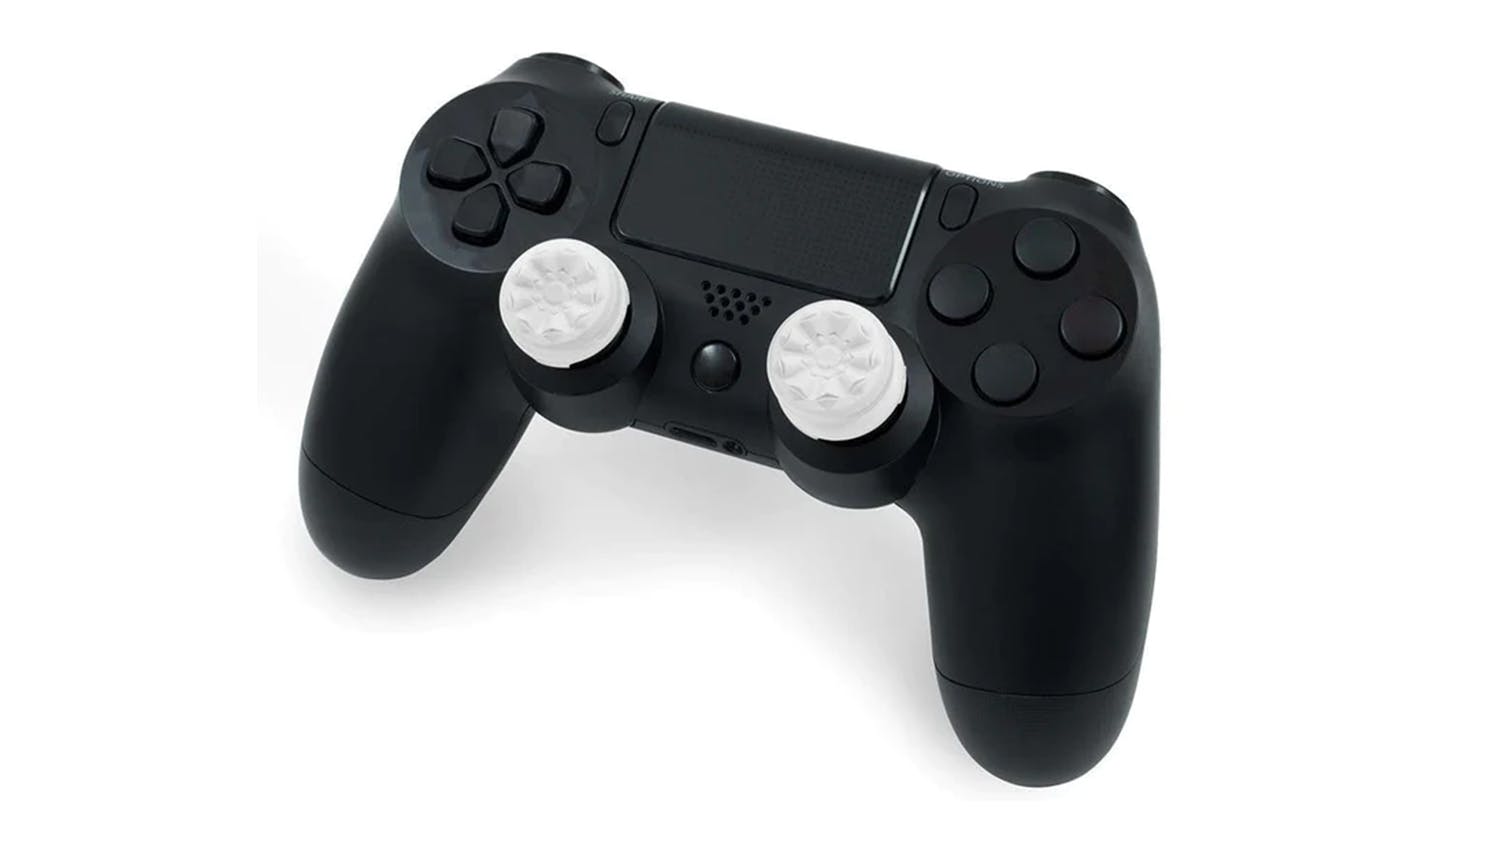 Kontrol Freek Ultra Black Performance Thumbgrips PS5 PS4